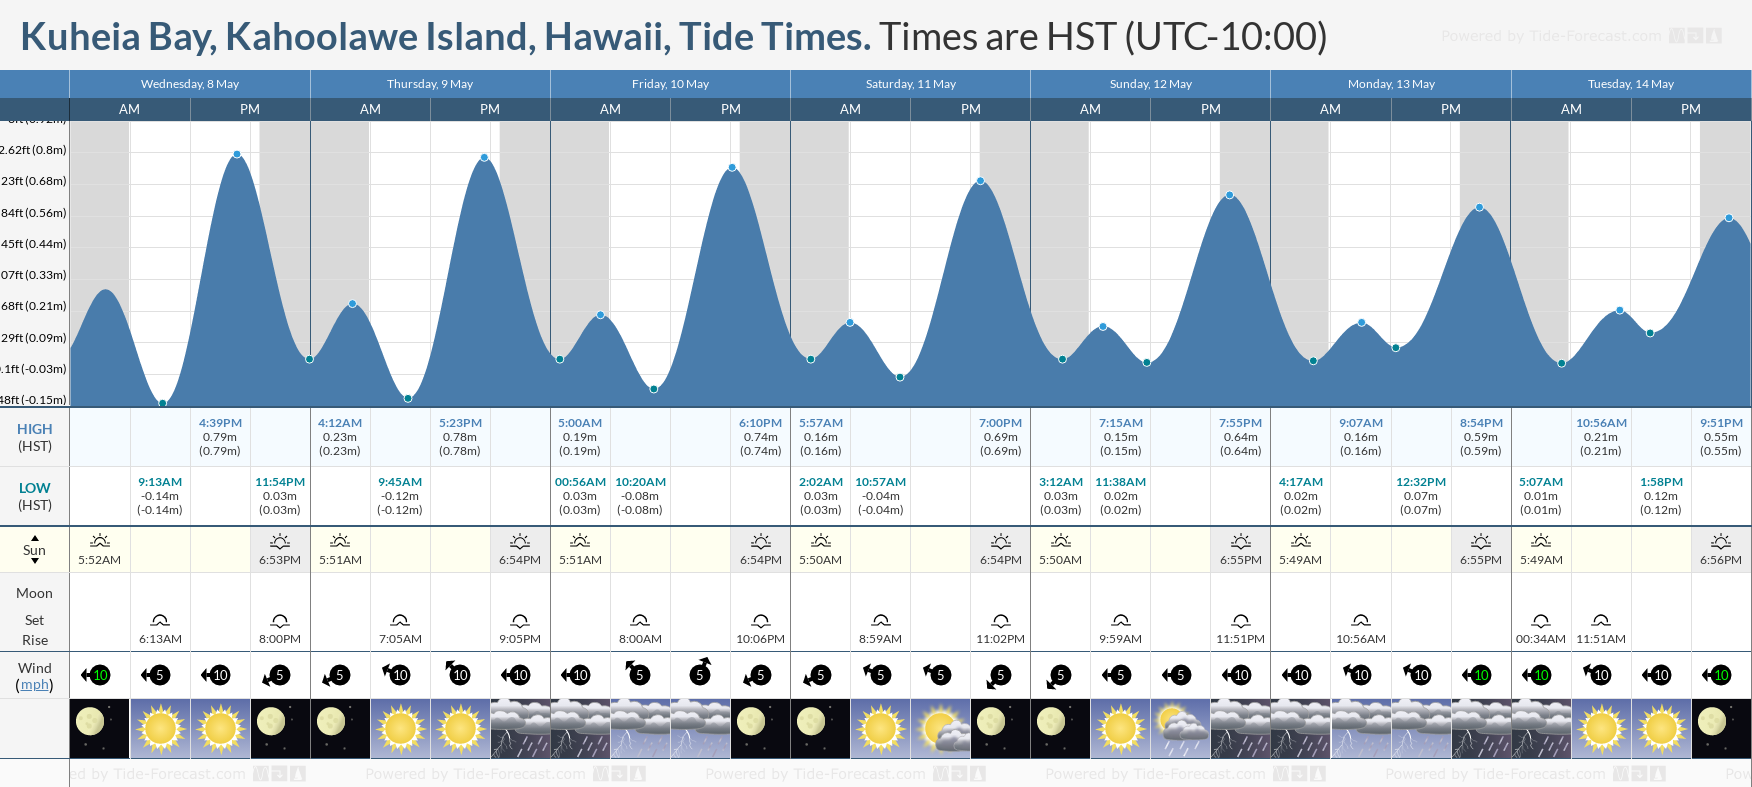 Kuheia Bay, Kahoolawe Island, Hawaii Tide Chart including high and low tide tide times for the next 7 days